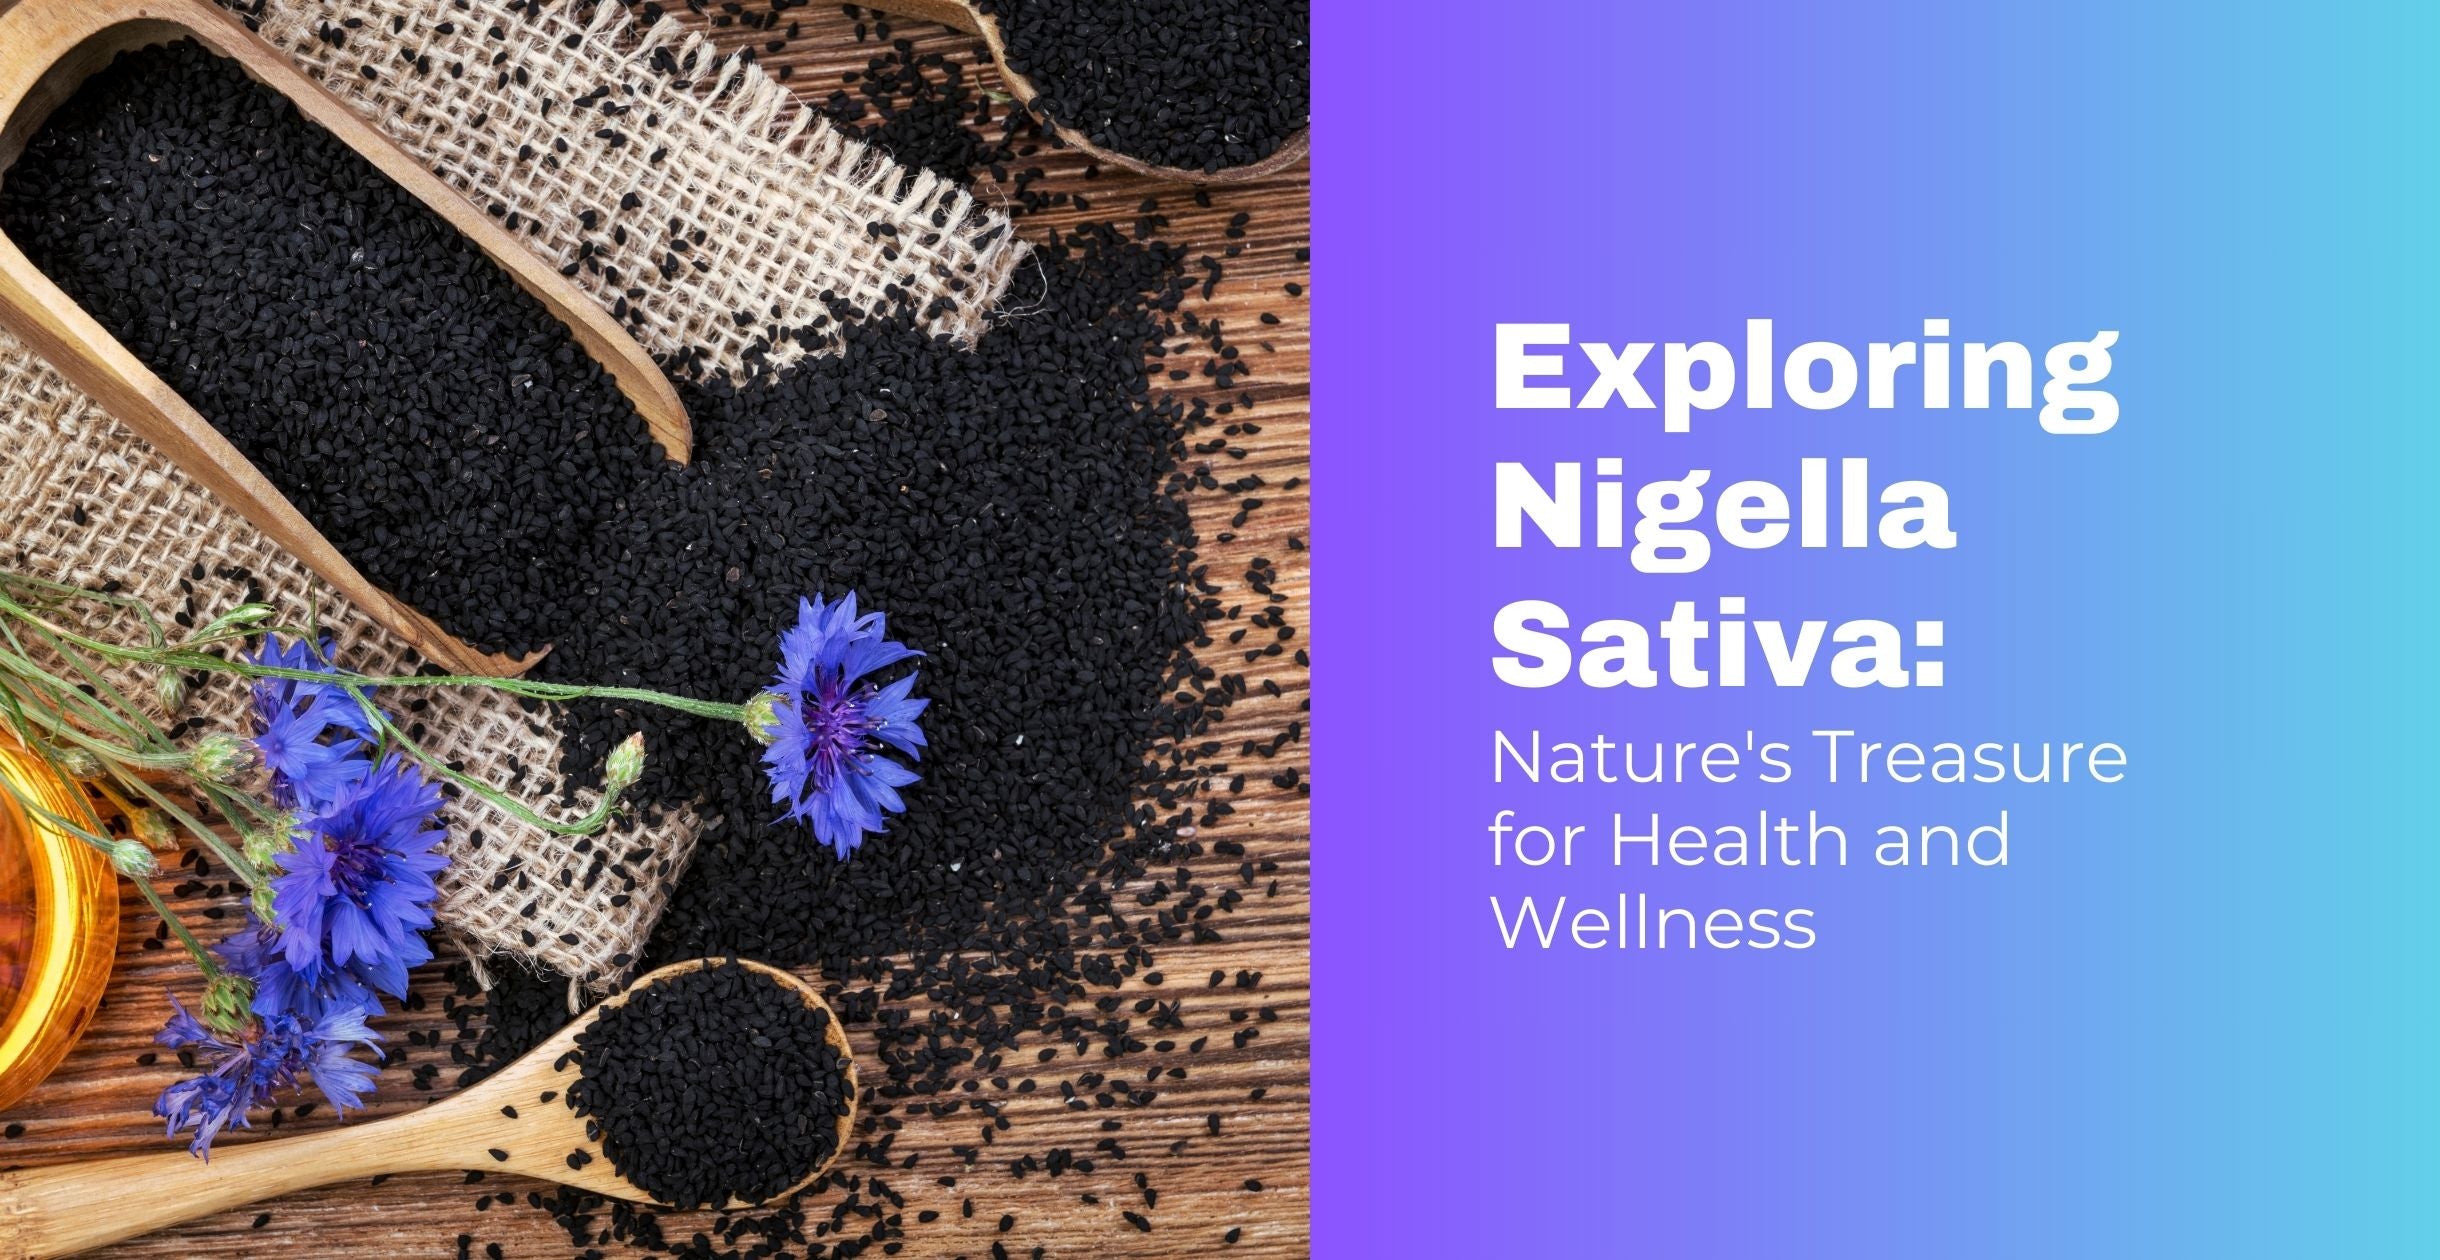 Exploring Nigella Sativa: Nature's Treasure for Health and Wellness